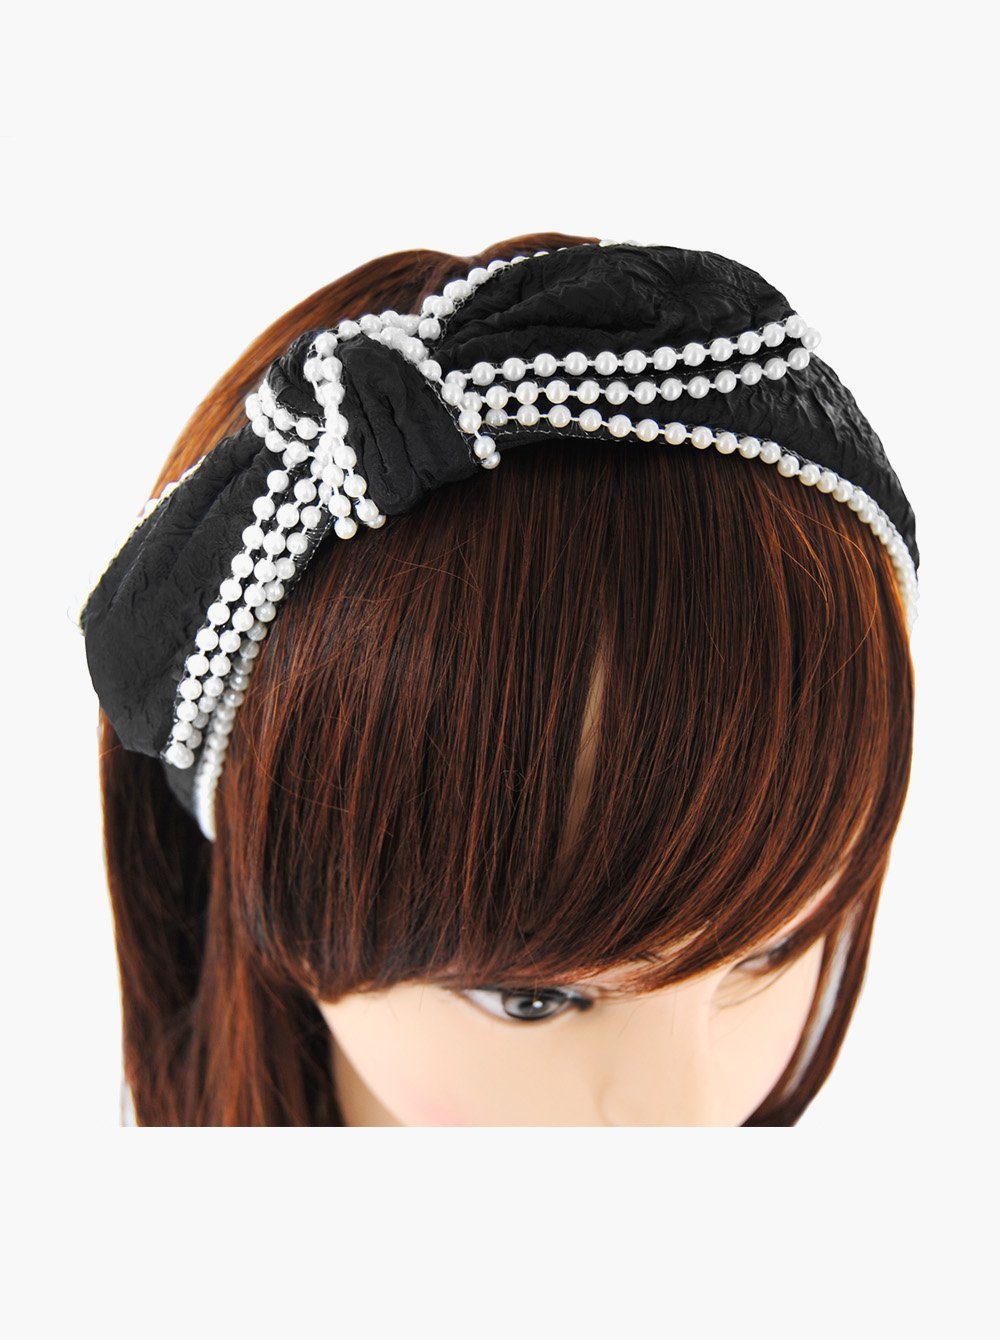 Haarreif axy x große Haarband cm cm, Perlen mit Vintage Haarreif Haareifen 14,5 Damen Schwarz 4,5 und Schleife